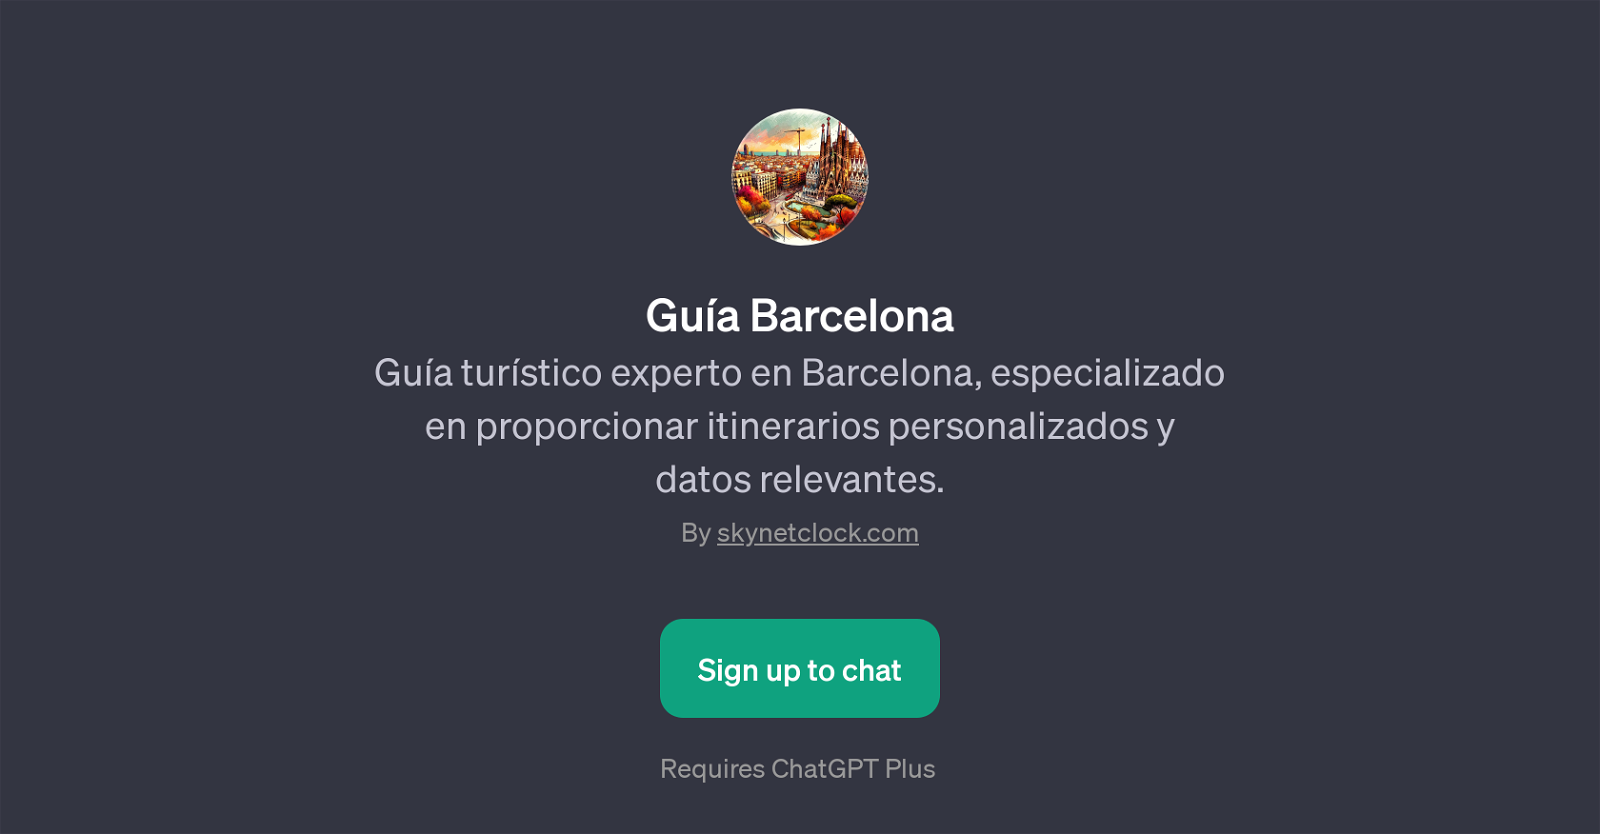 Gua Barcelona website